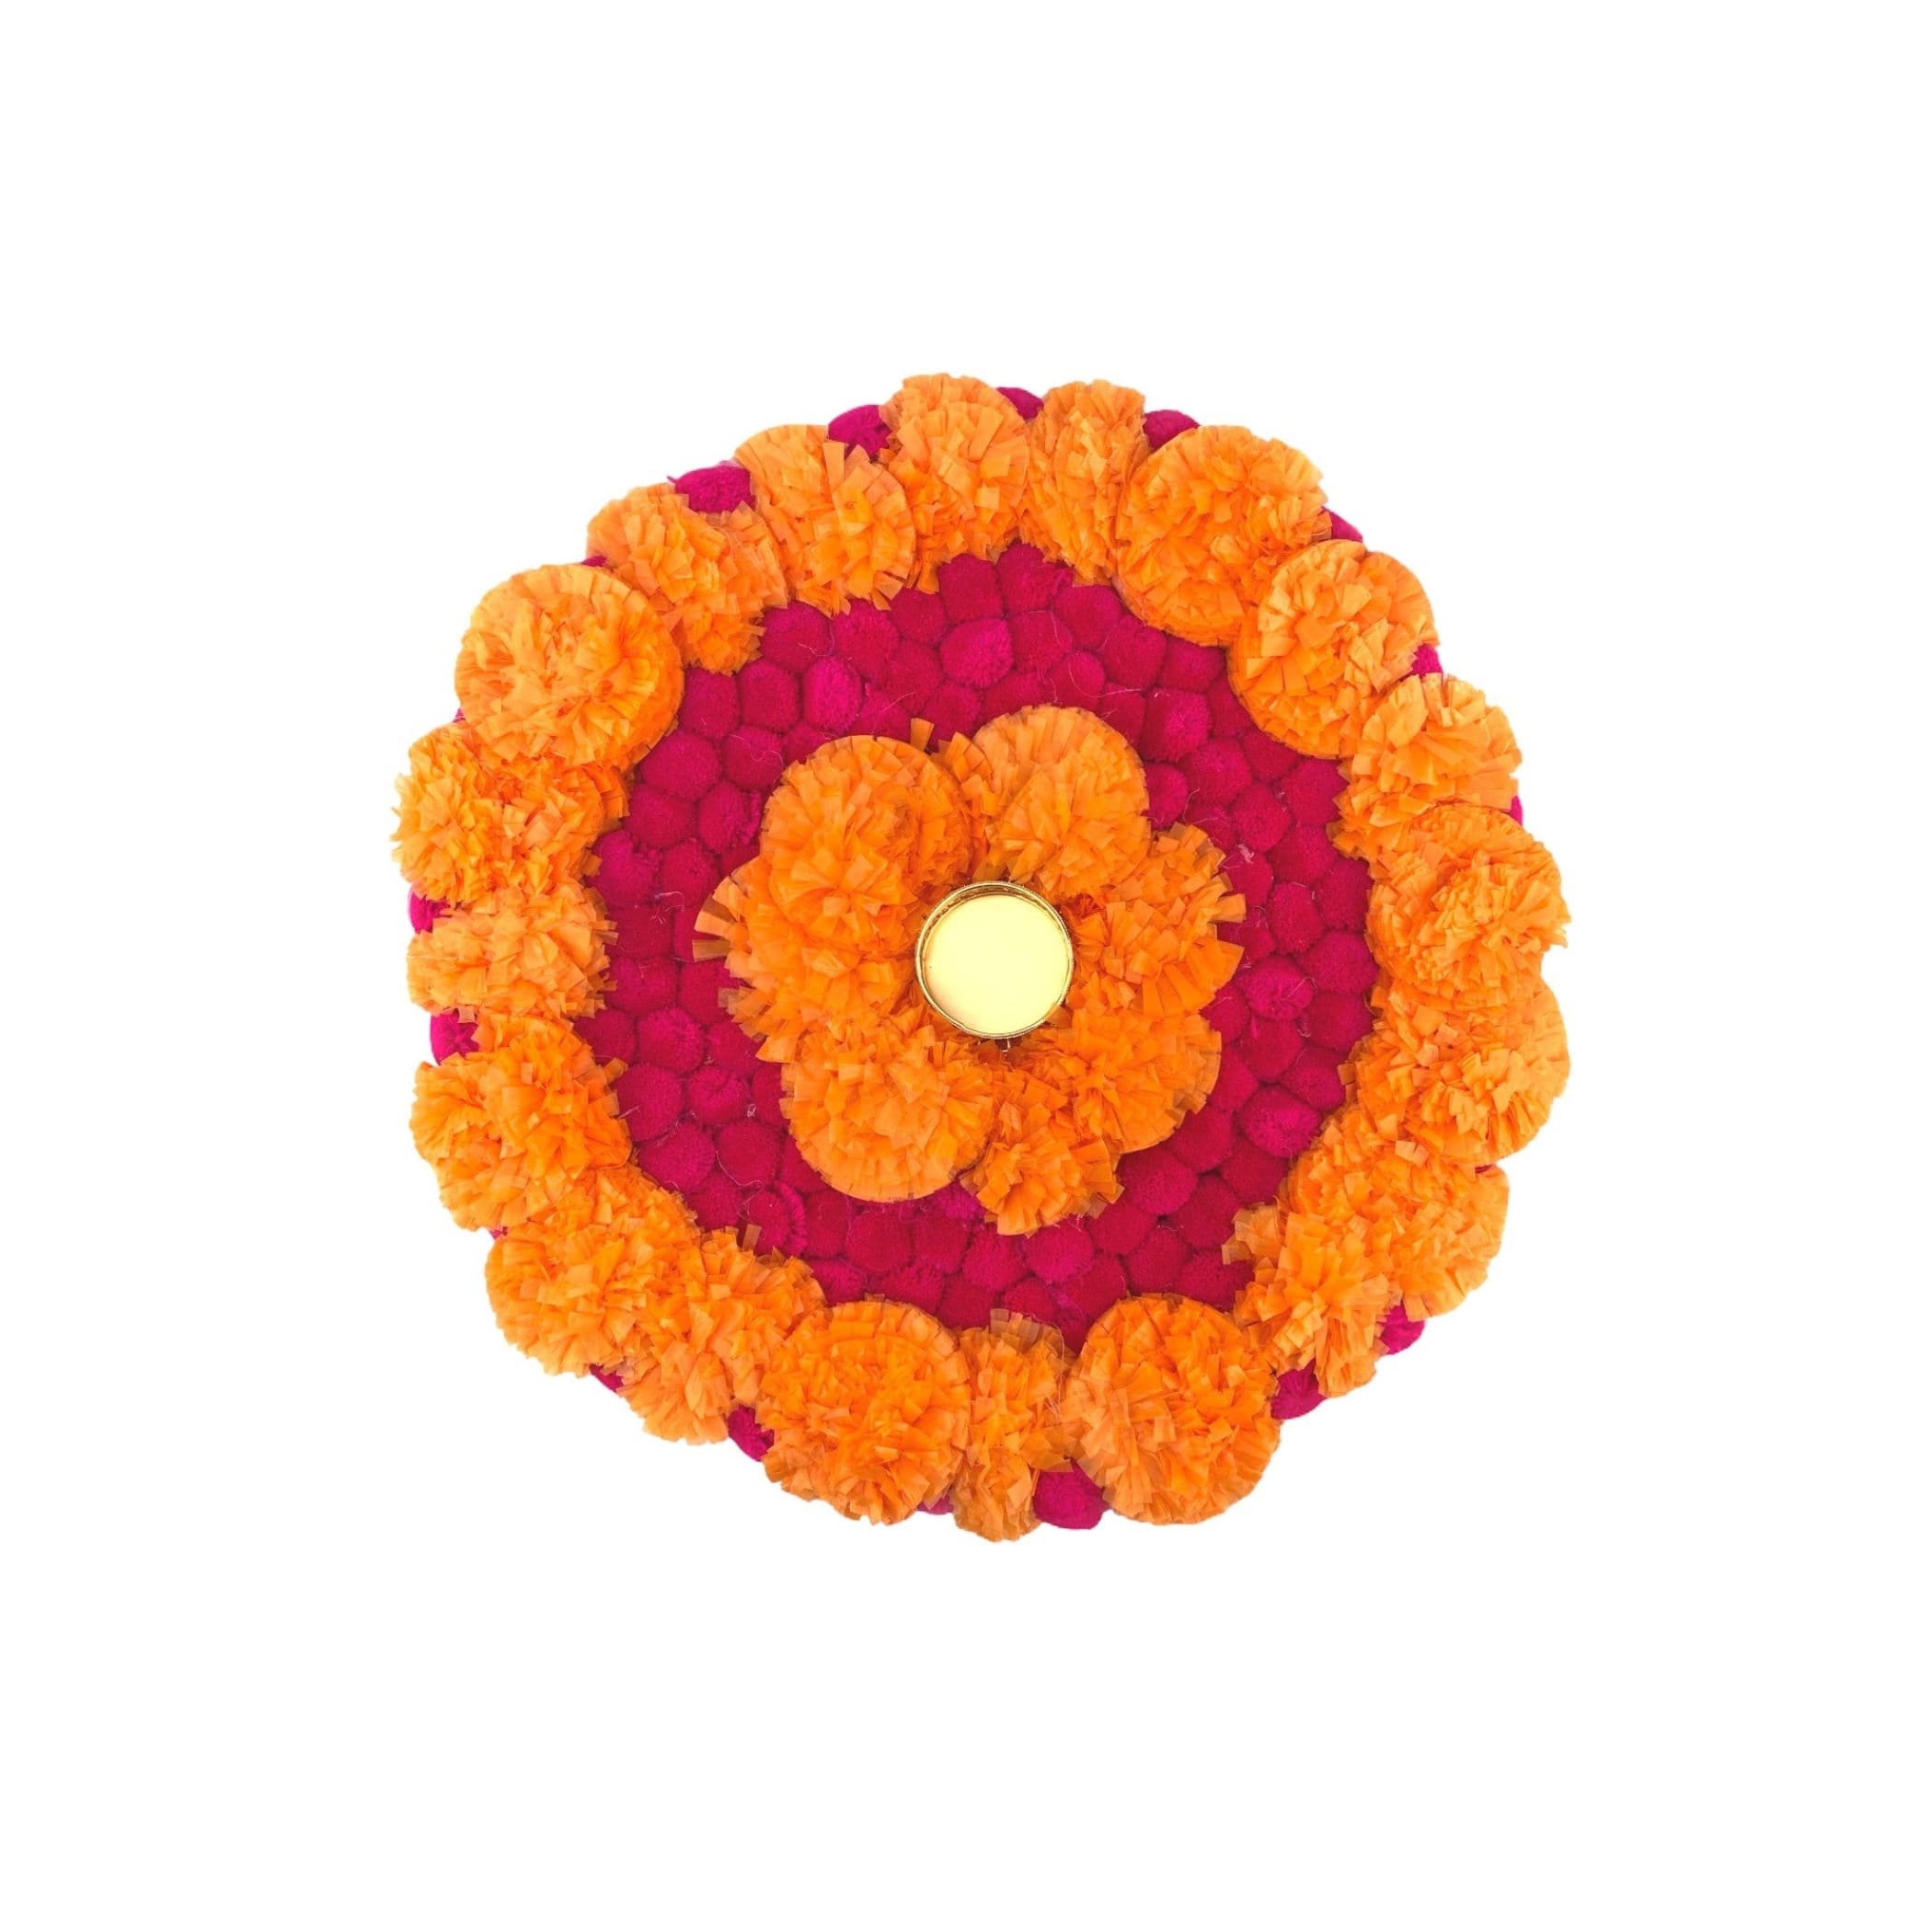 Mat rangoli diwali decor set artificial marigold flowers